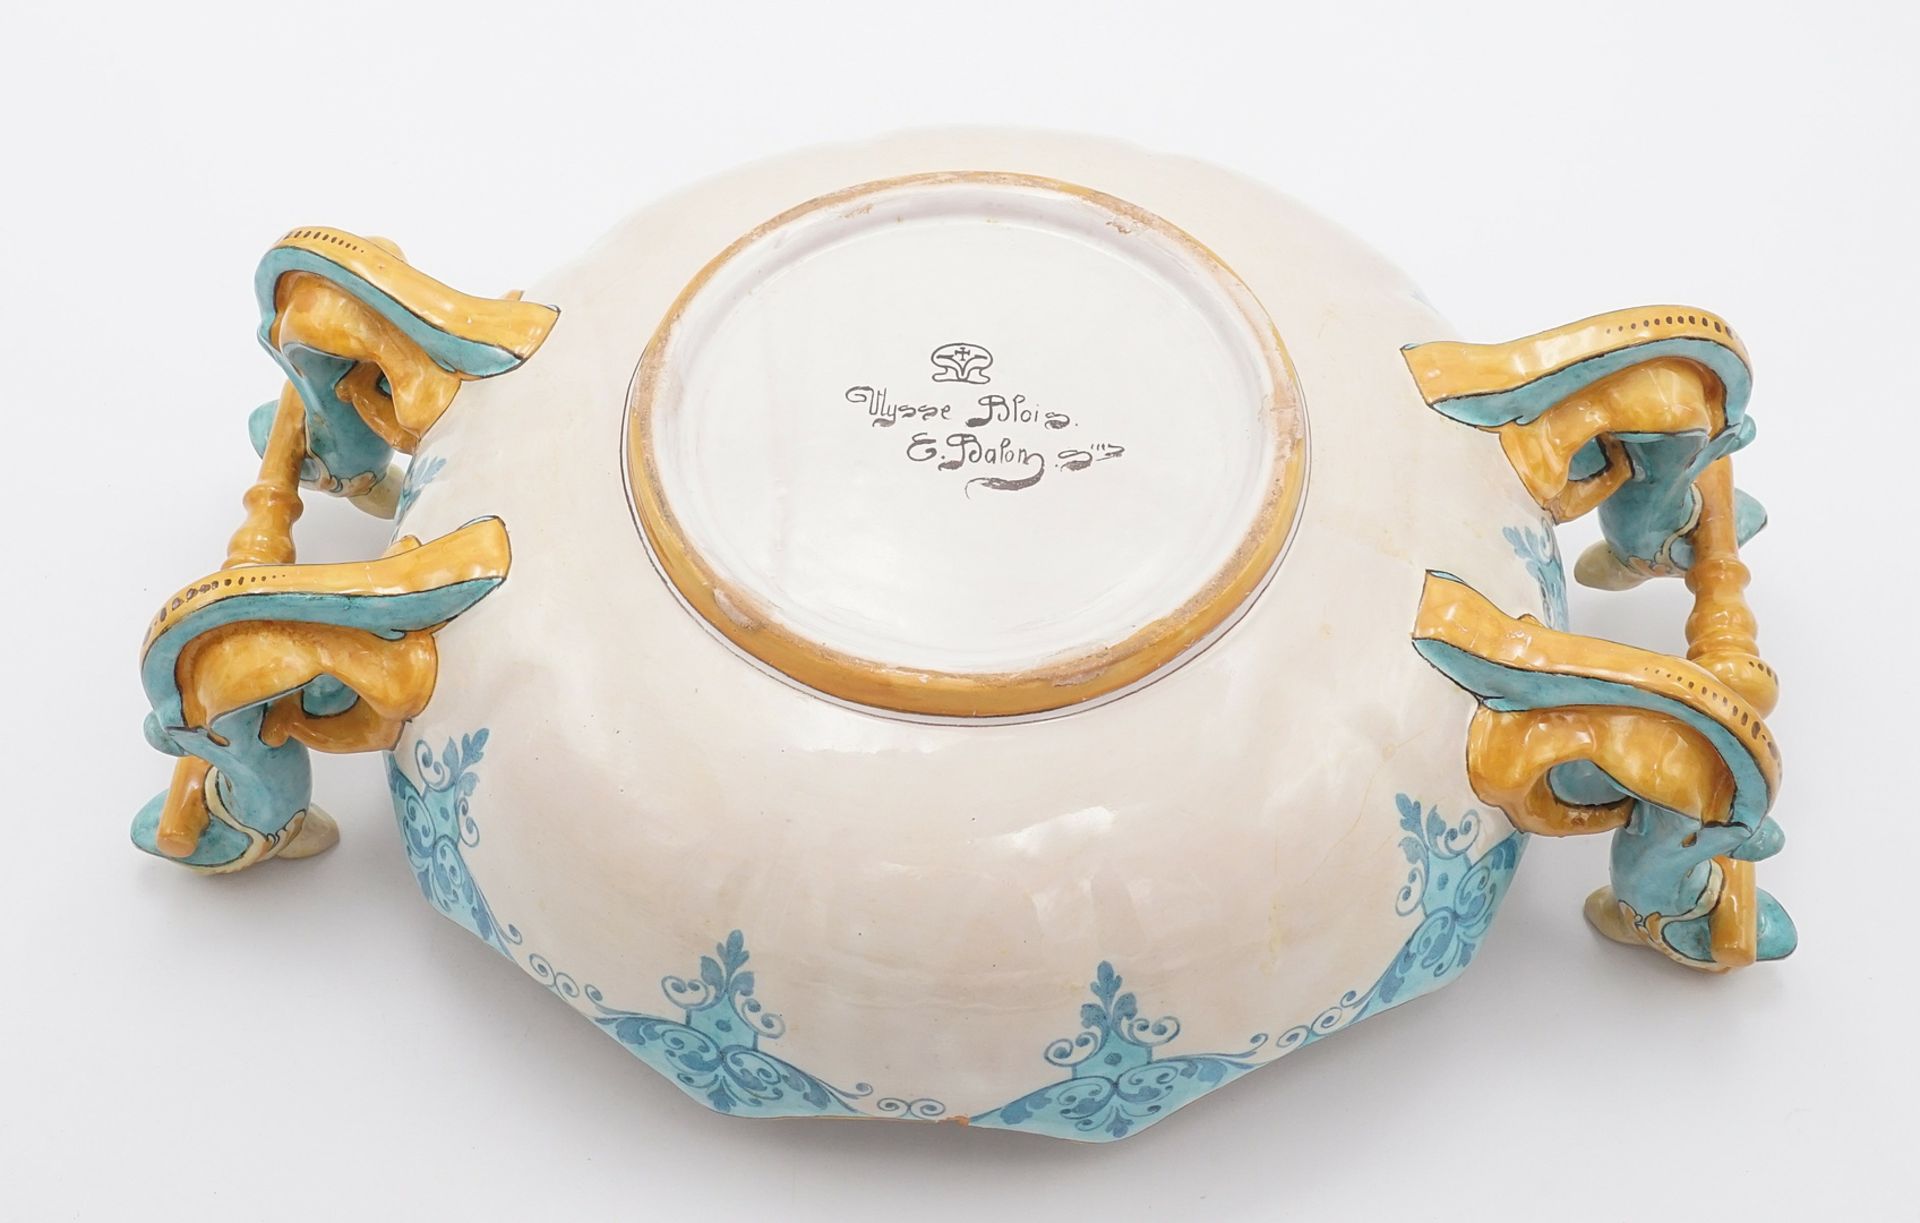 Émile Balon (1859-1929), Ulysse Blois bowl, 1st half of the 20th century - Image 4 of 4